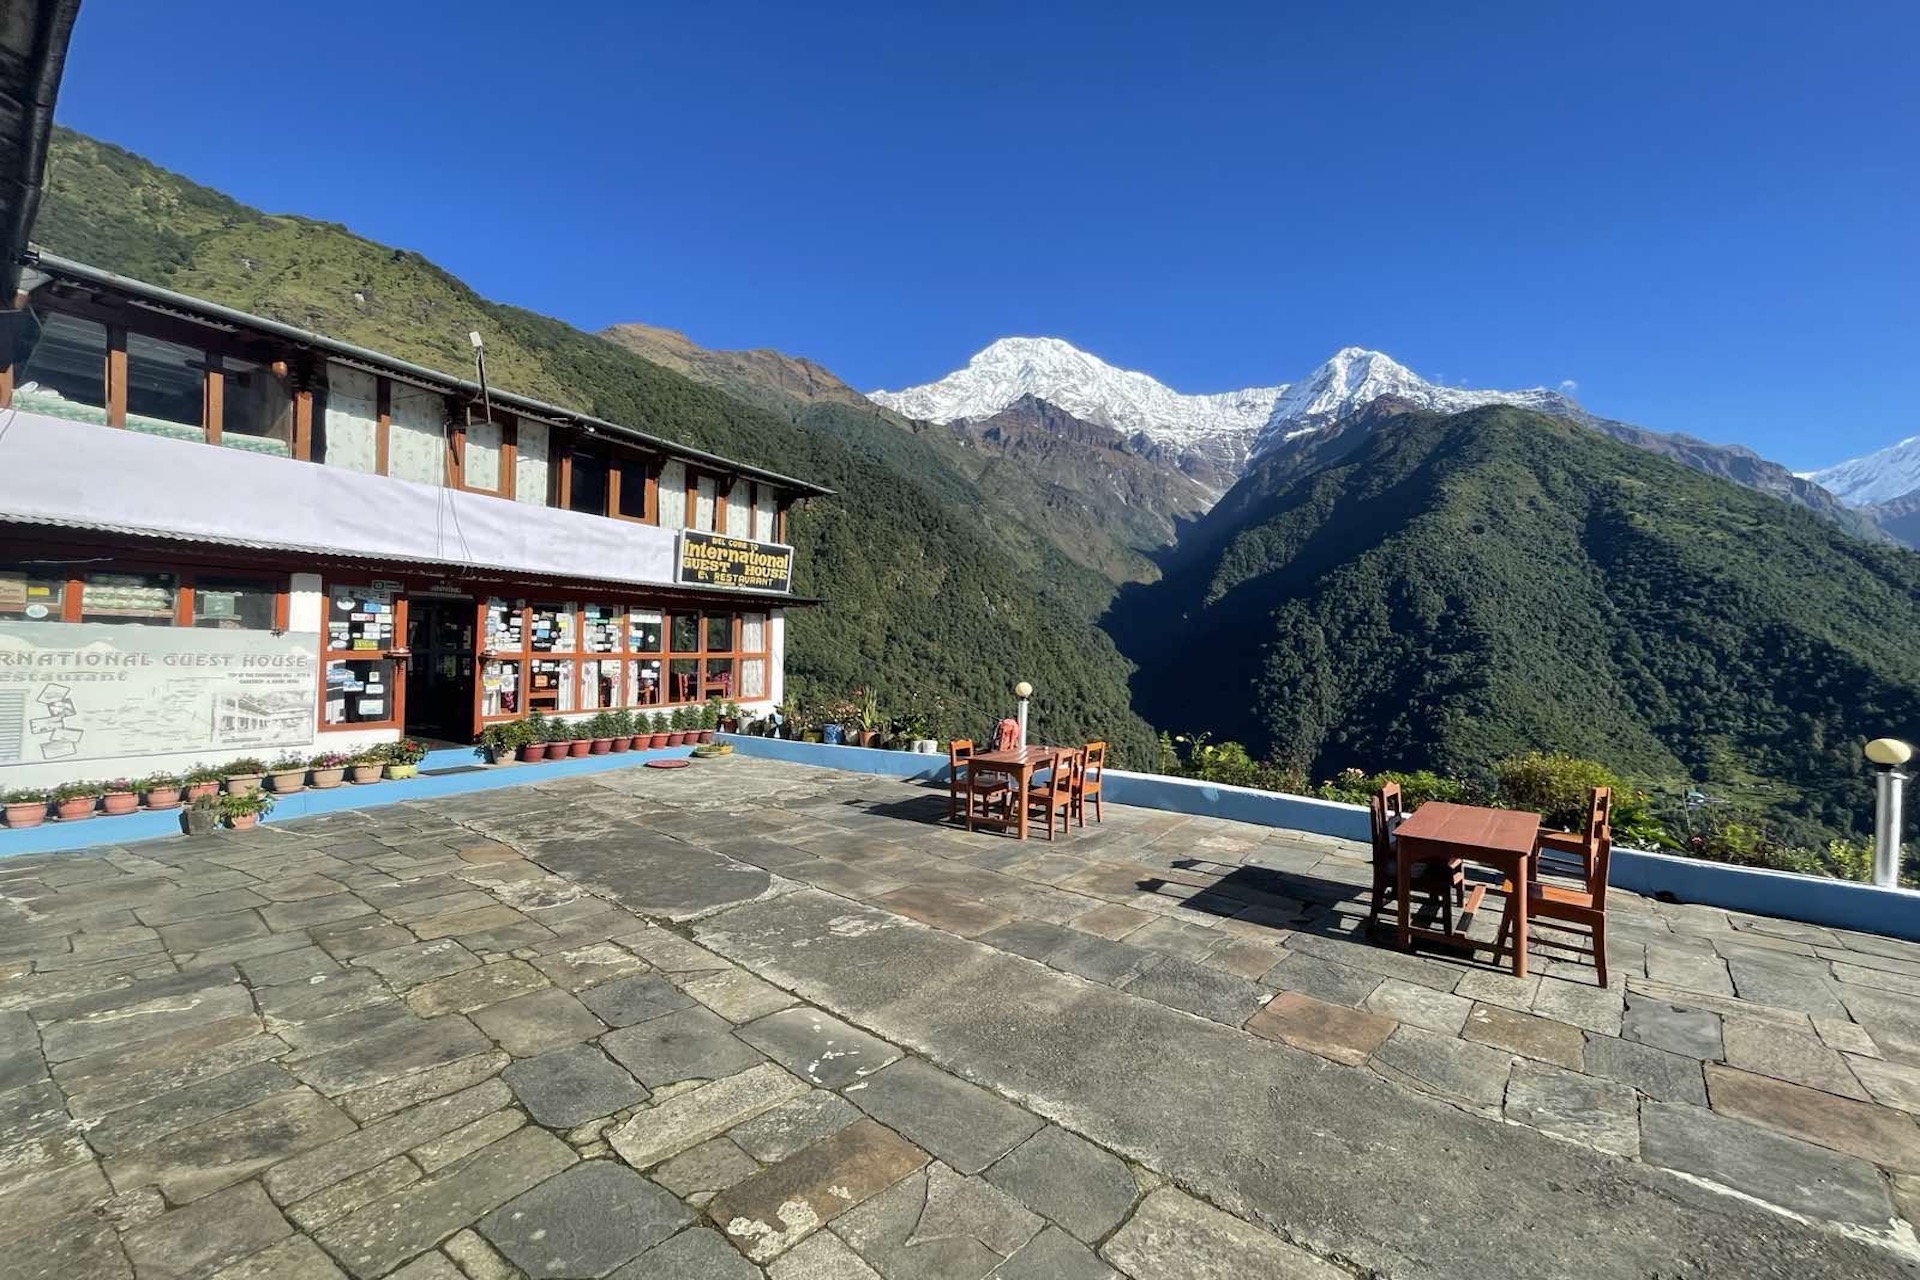 Annapurna base camp with World Adventure Tours